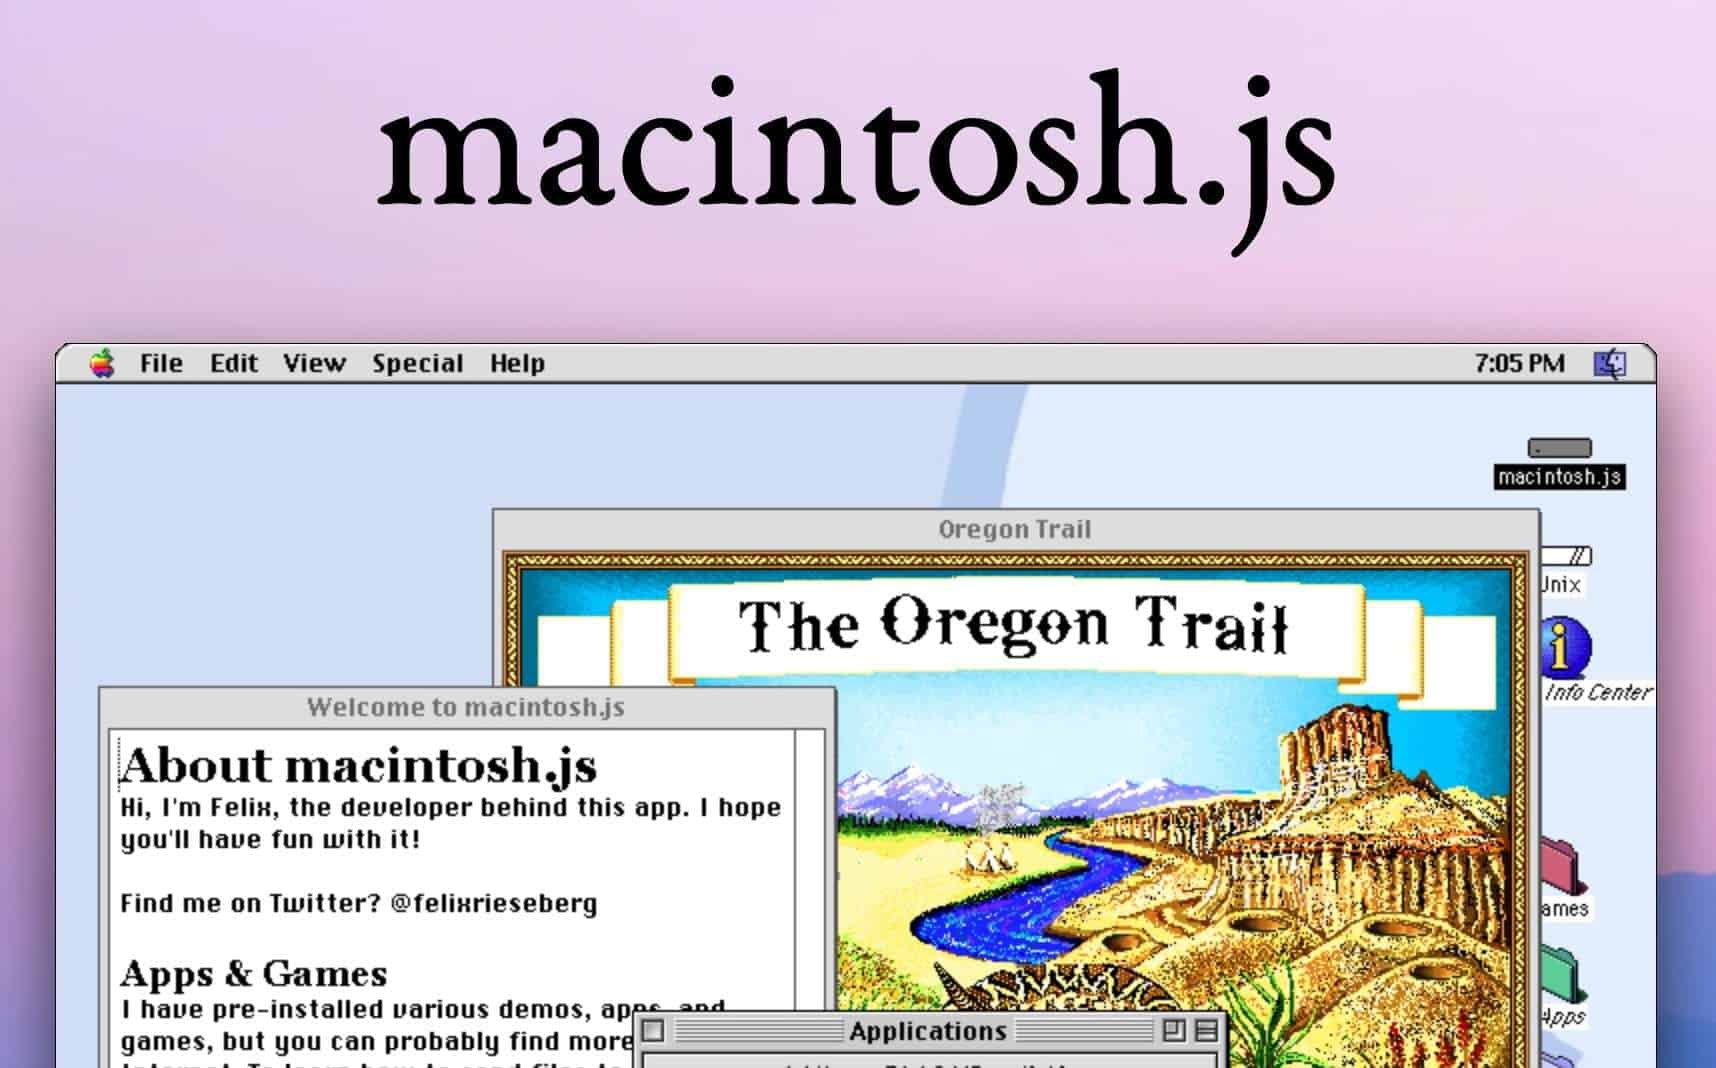 mac computer emulator